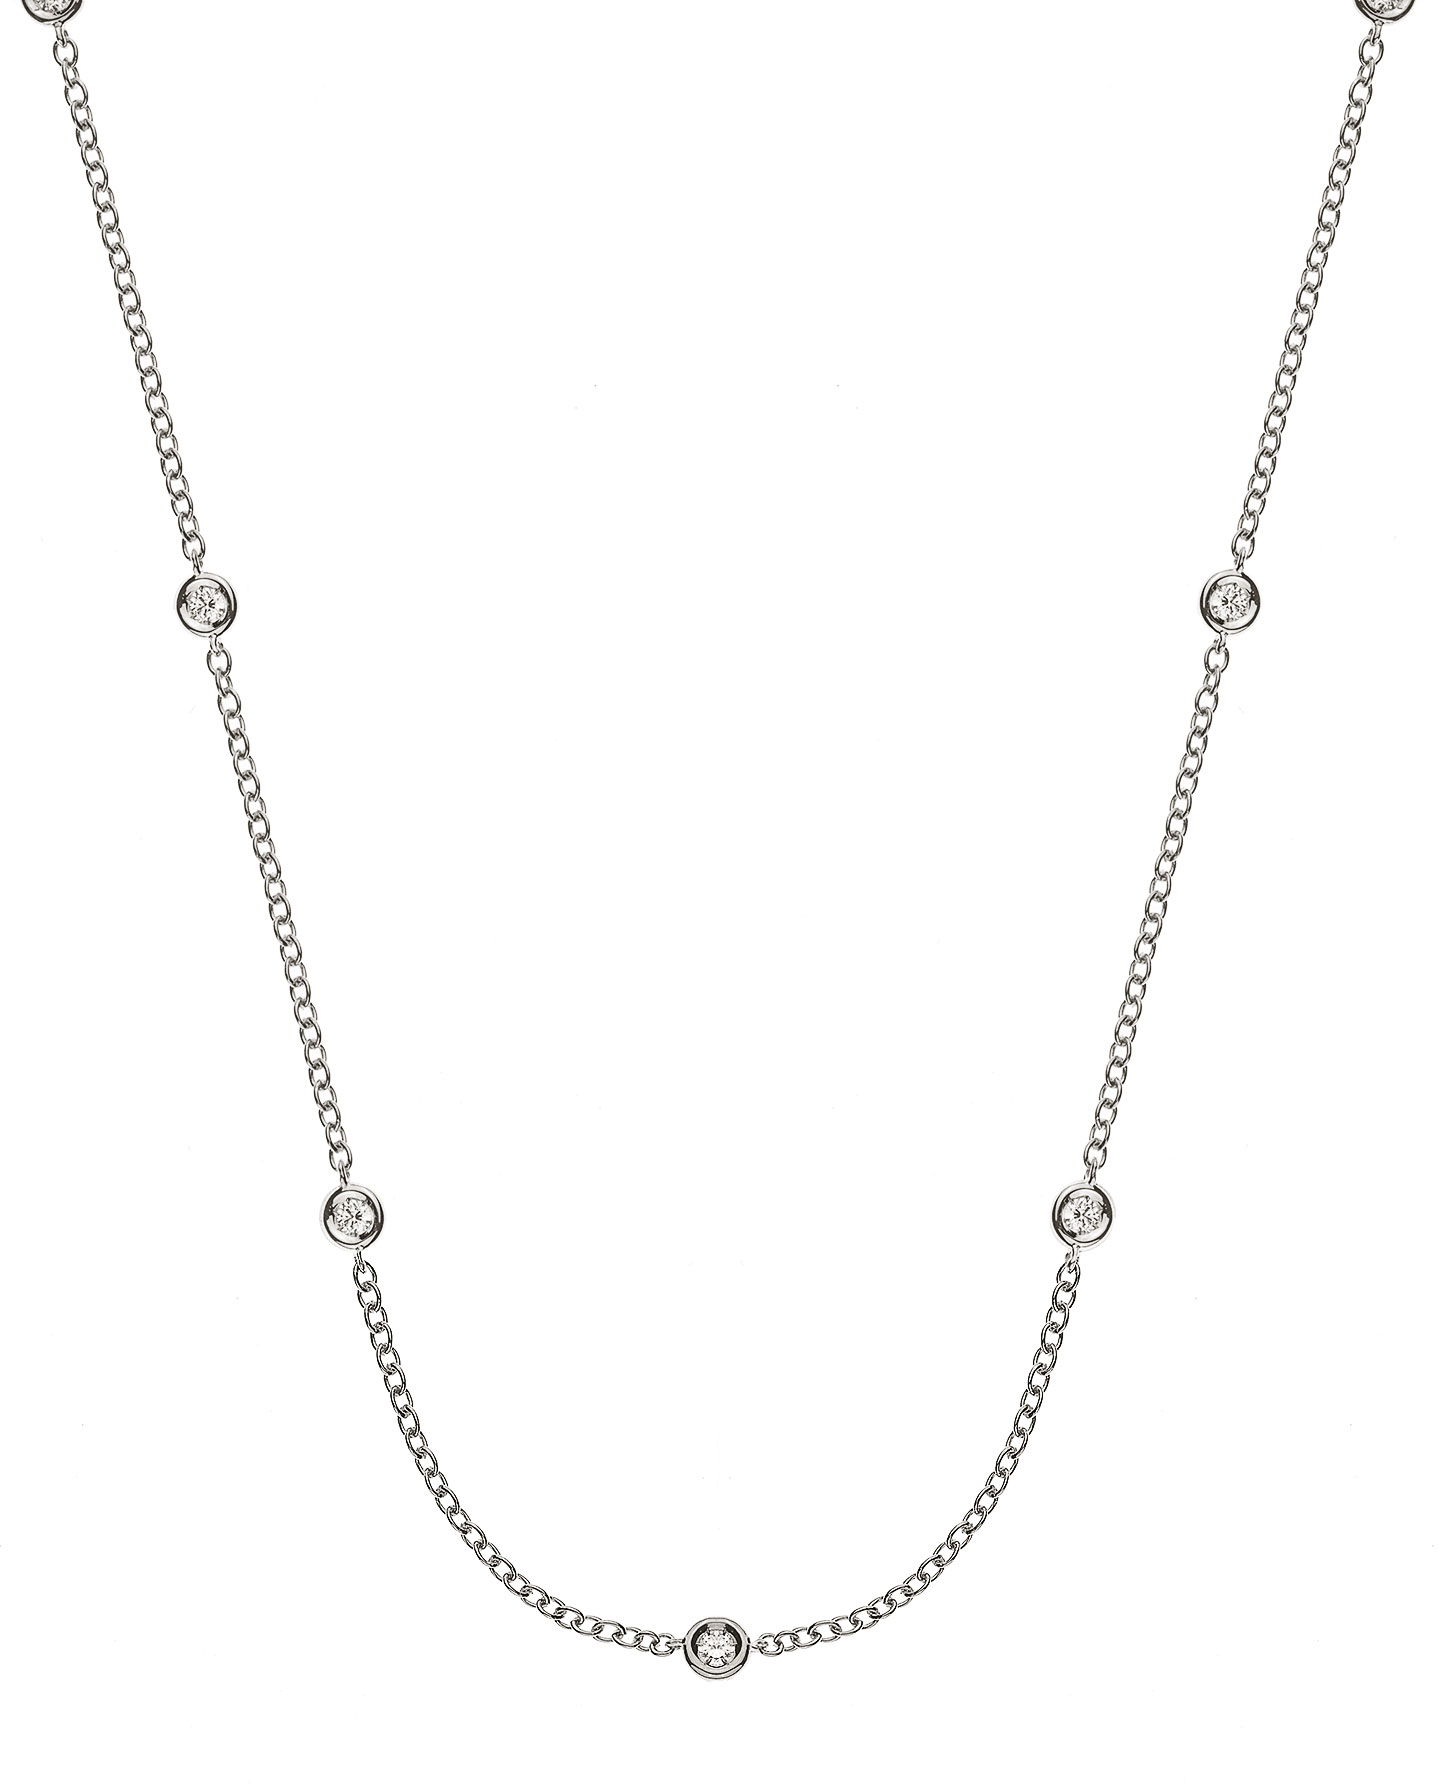 AURONOS Prestige Necklace white gold 18K diamonds 0.30ct